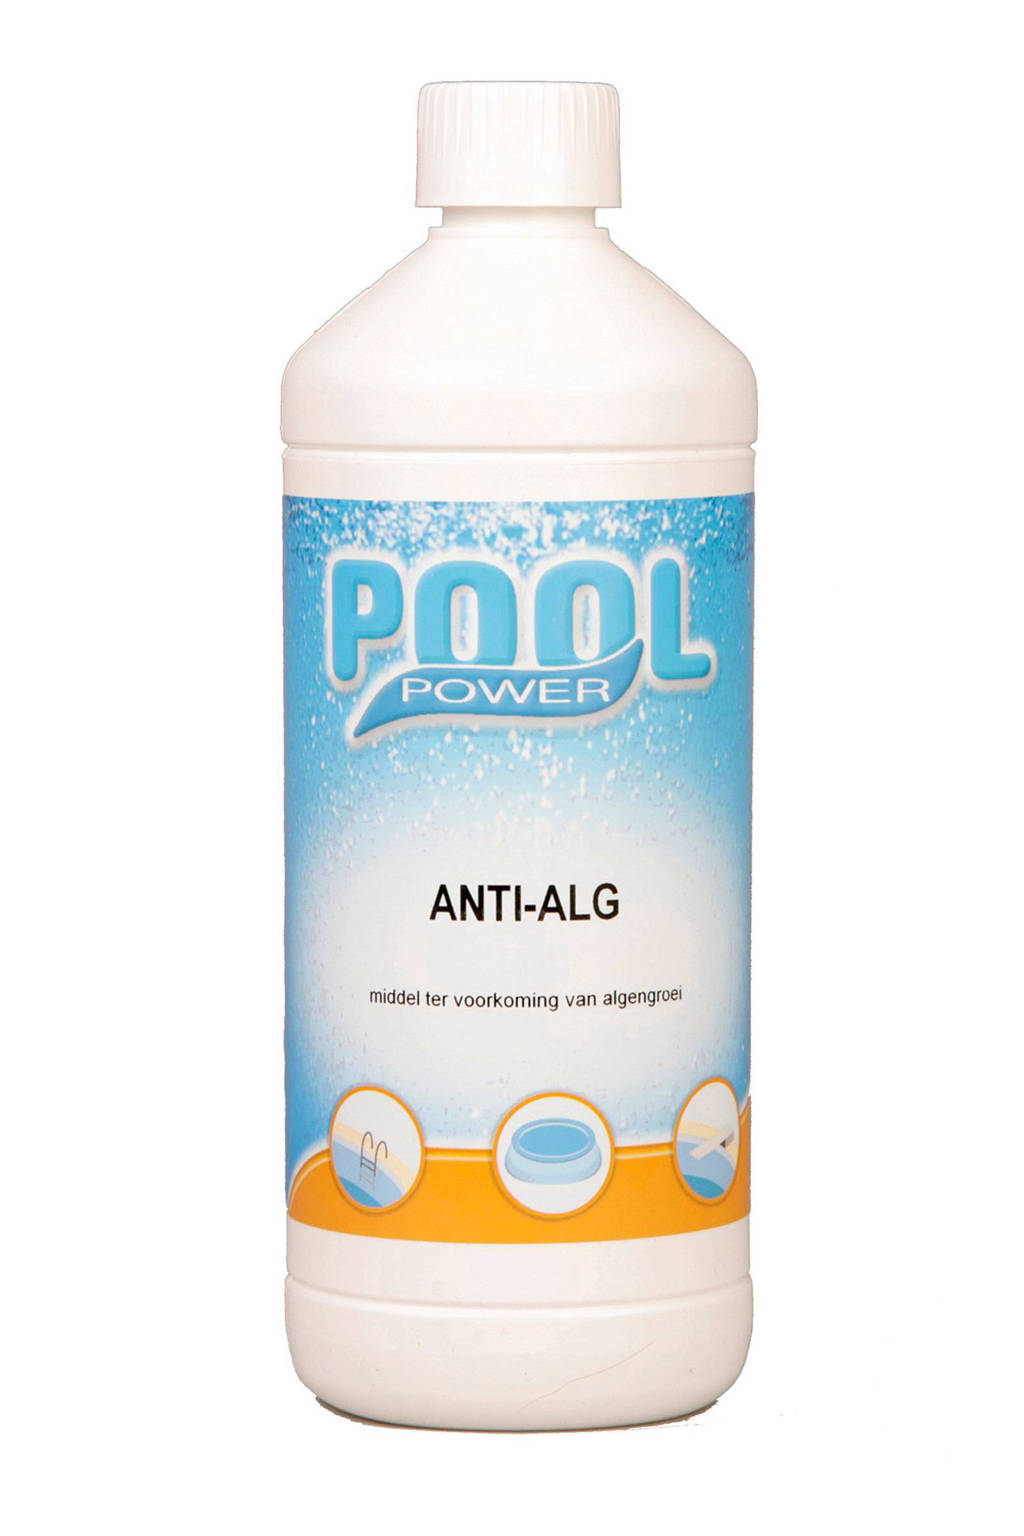 Pool power Anti-alg 1ltr